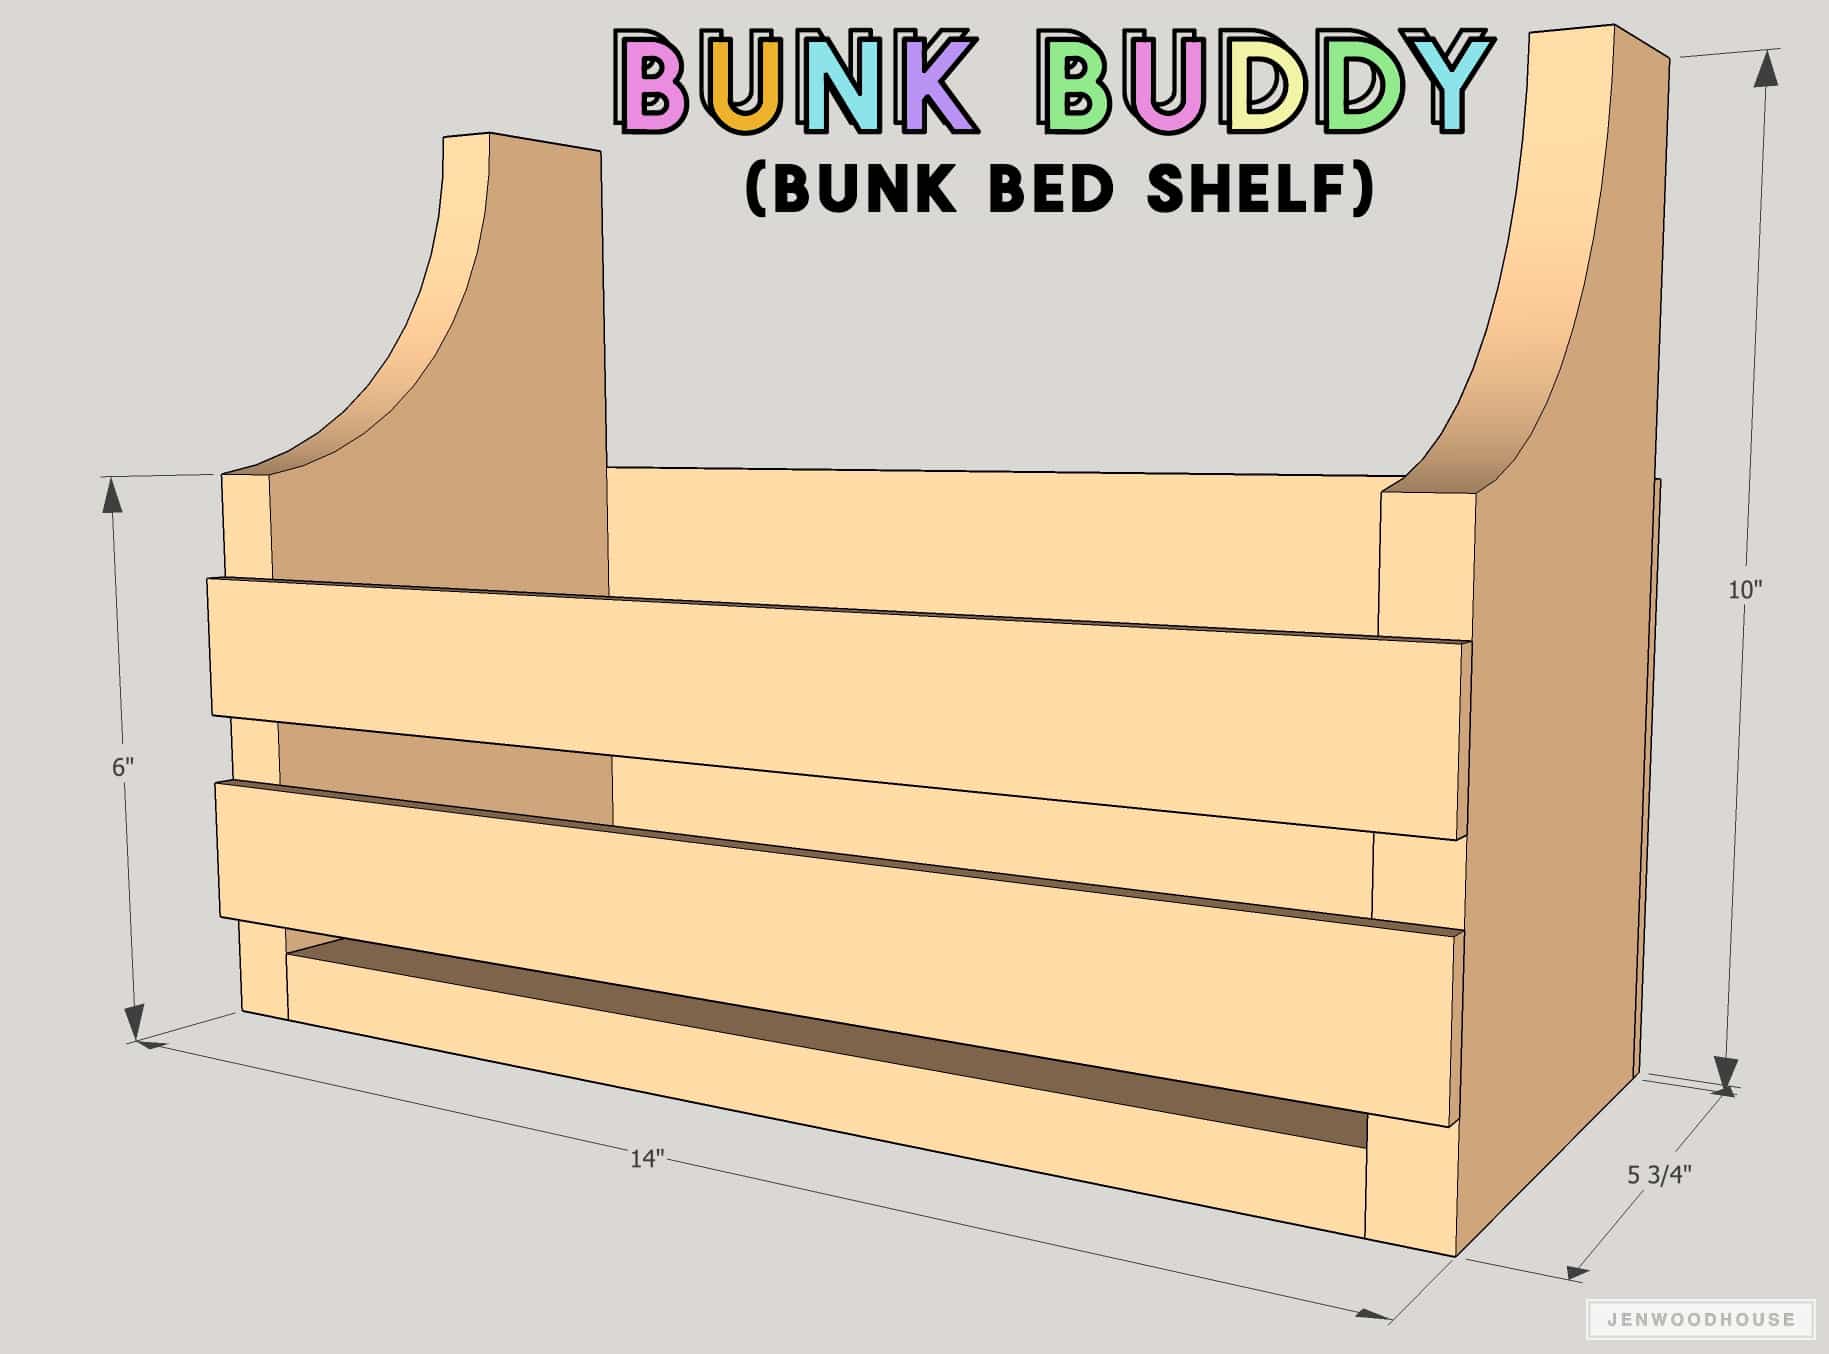 Diy Bunk Buddy Bed Shelf, Bunk Bed Cup Holder